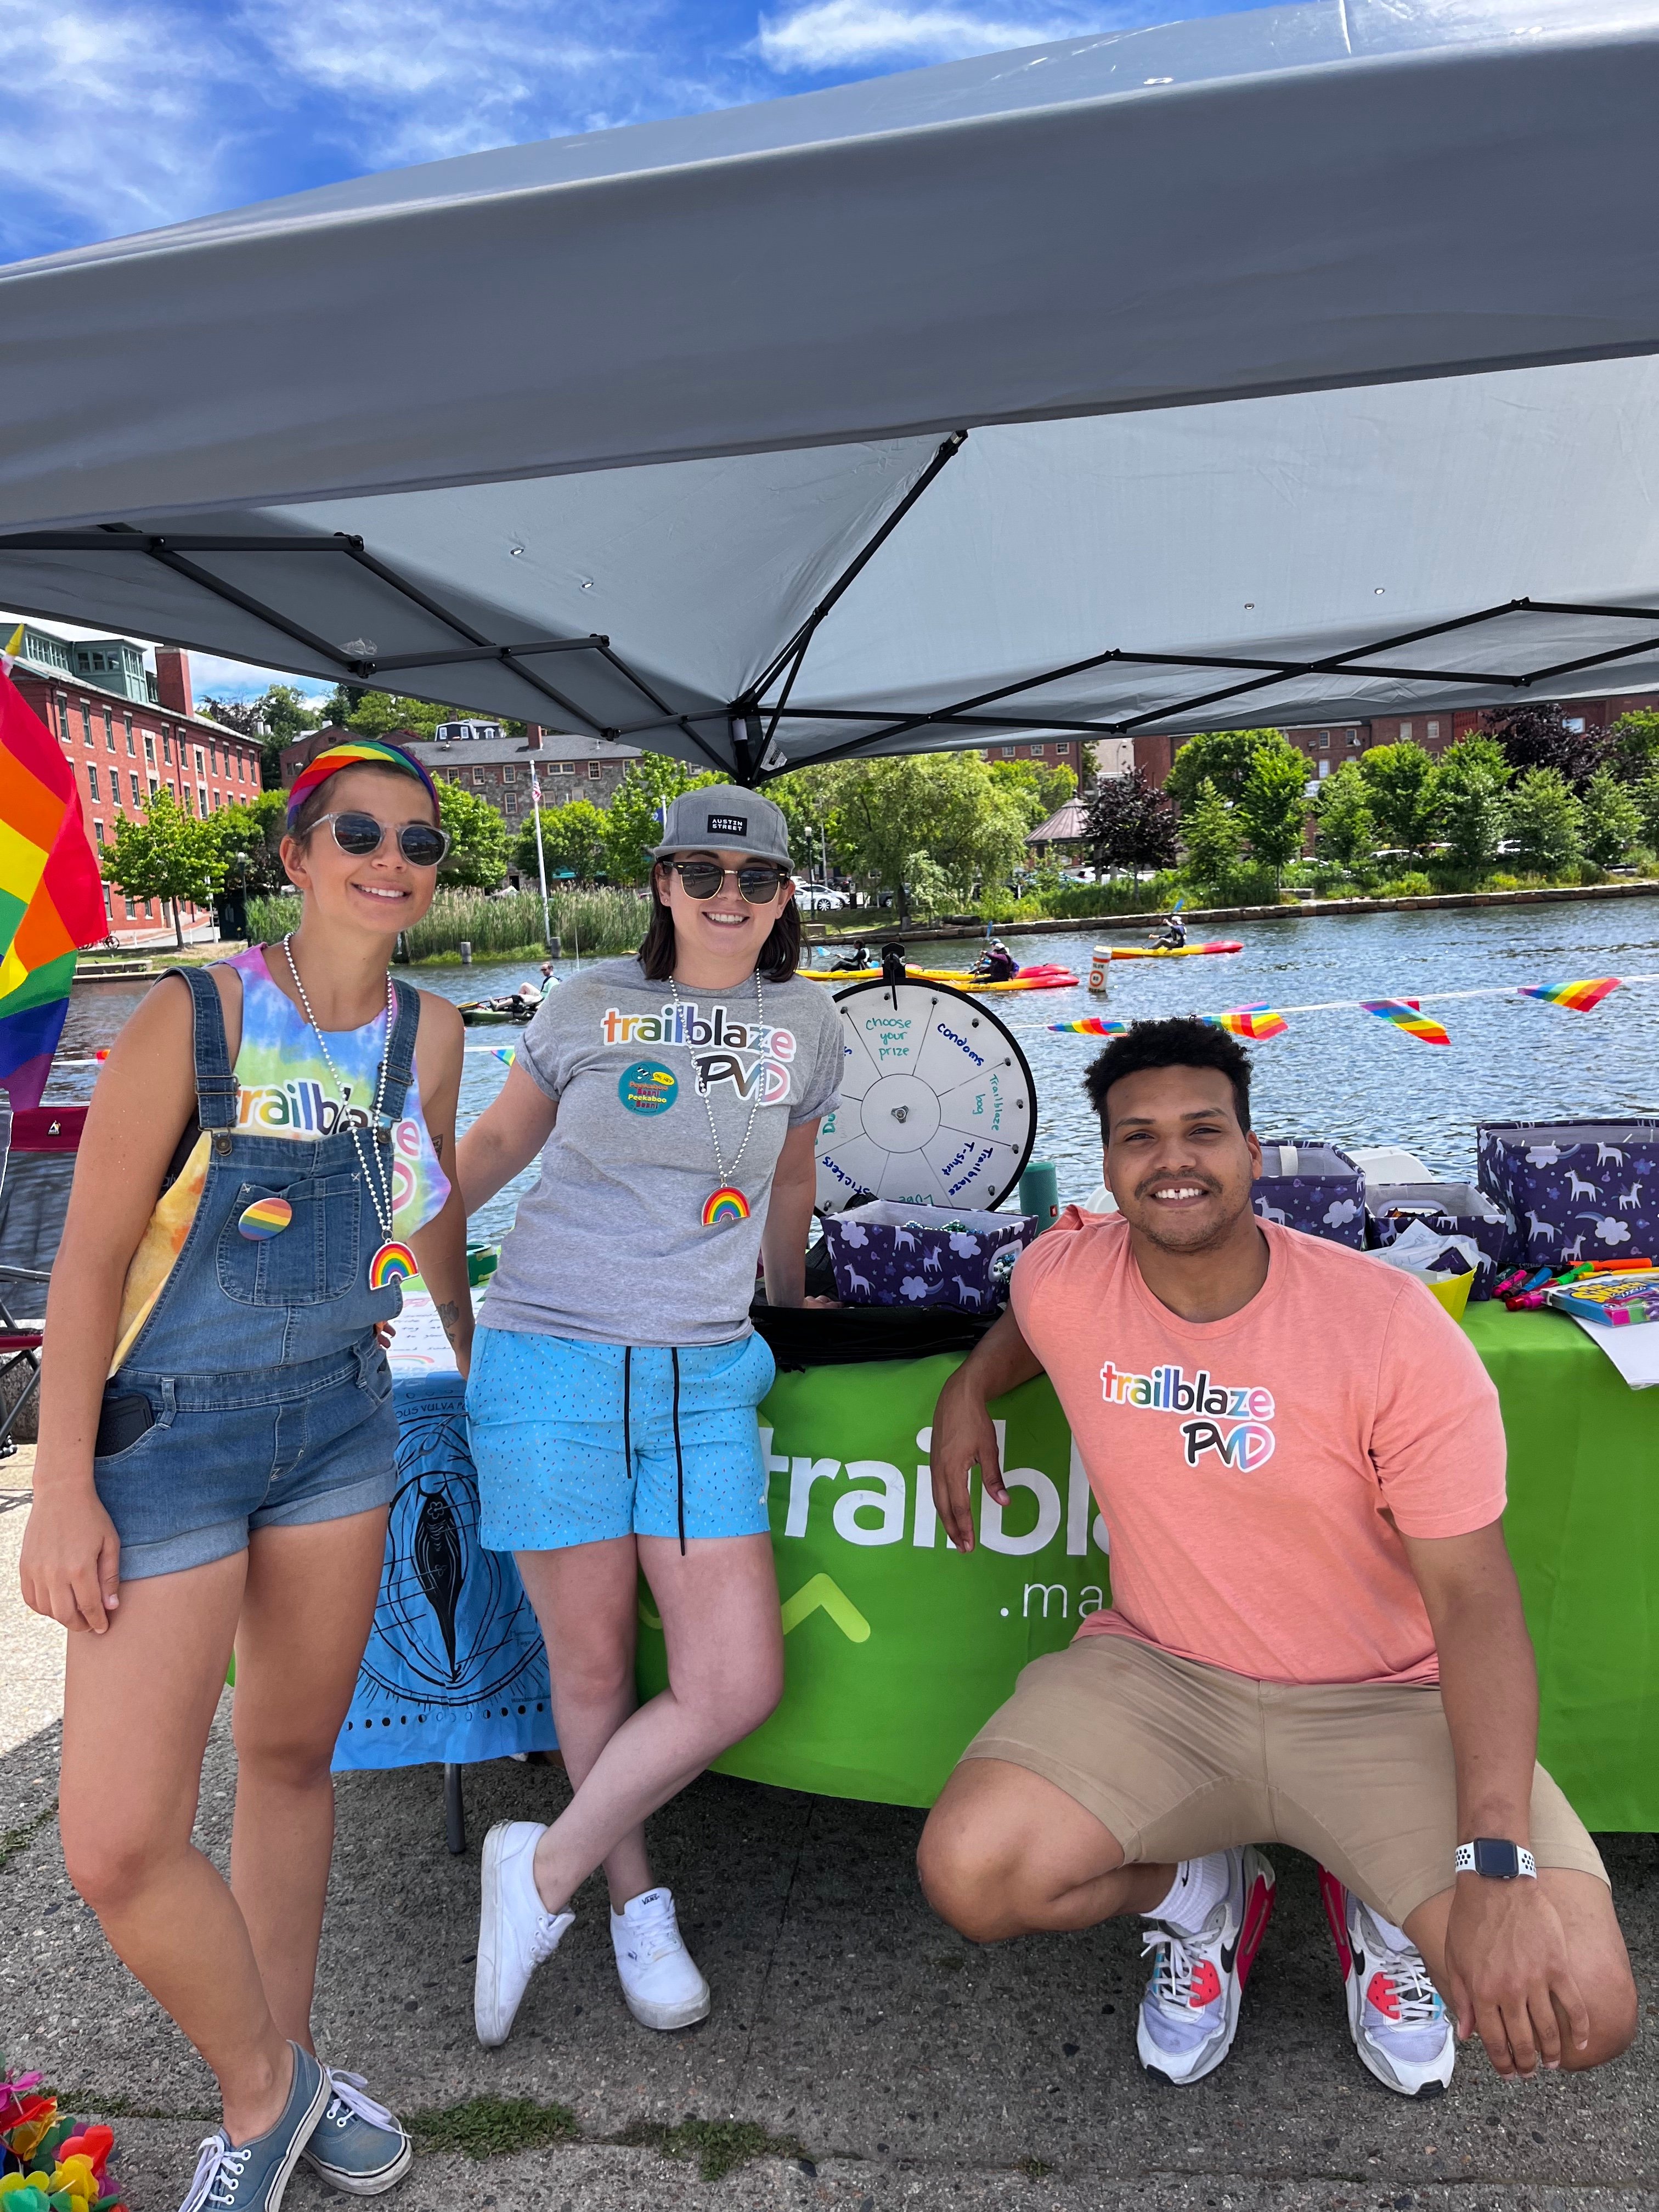 Team Trailblaze at Rhode Island Pride